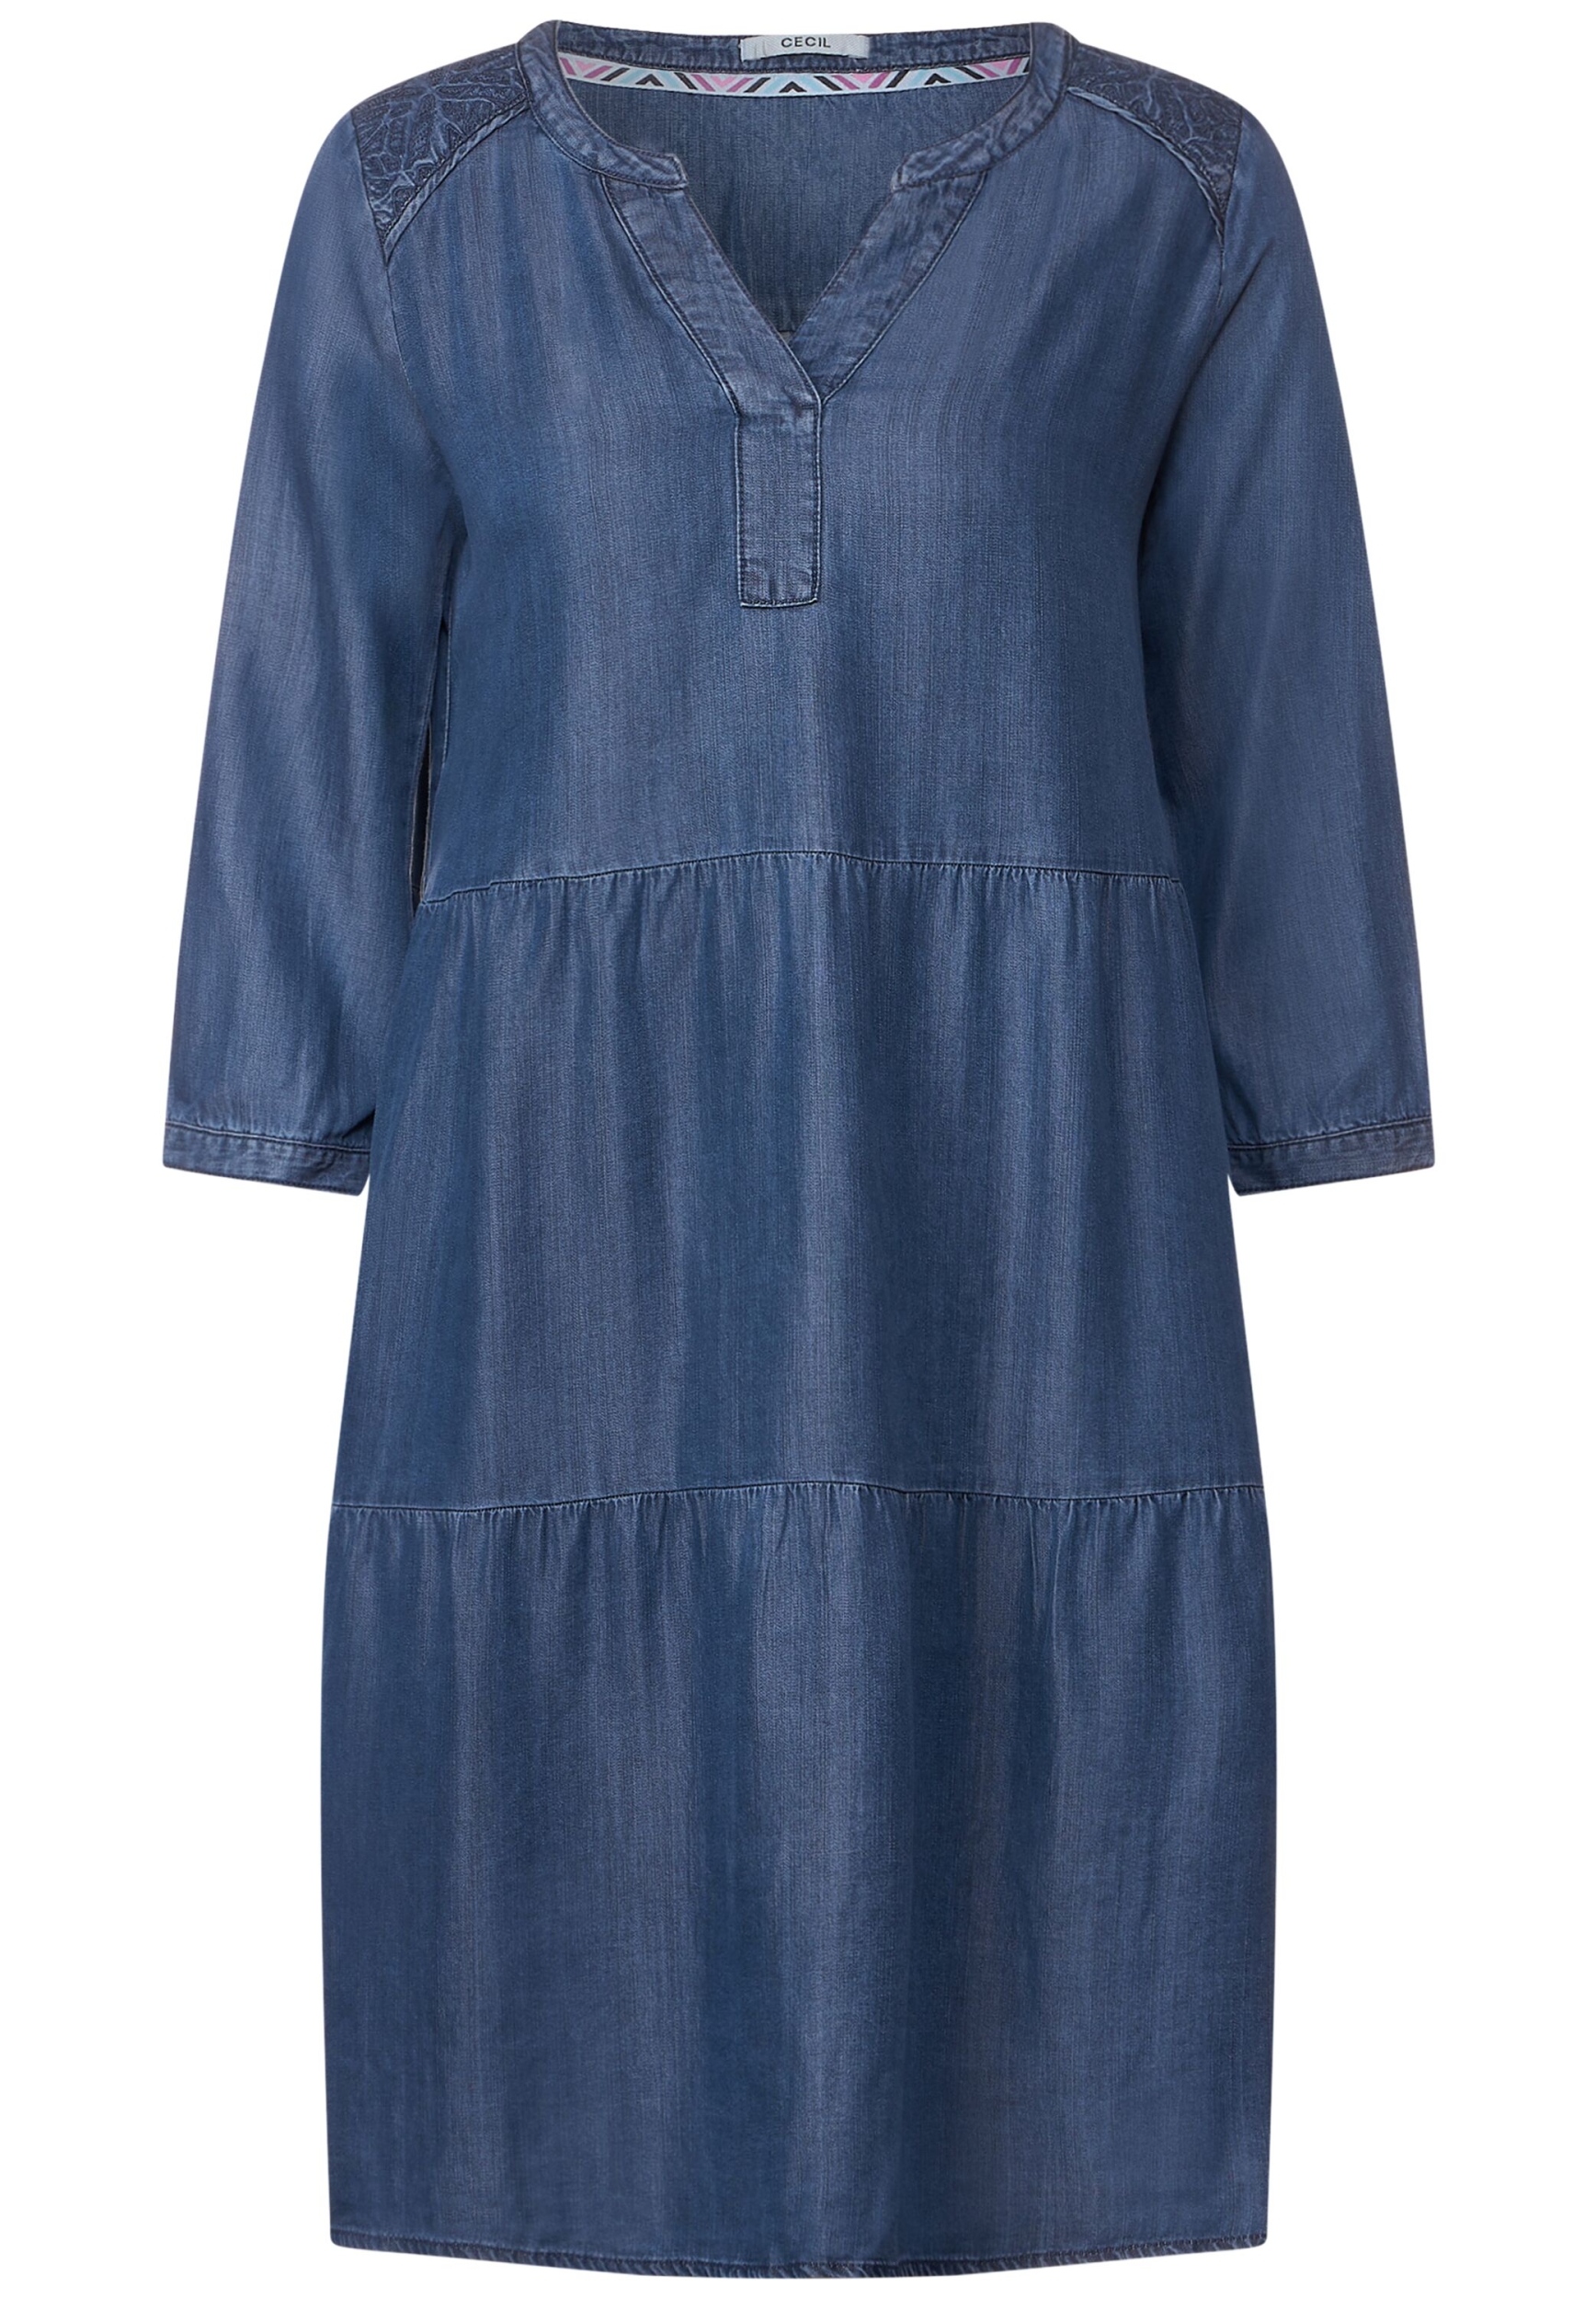 | | XS blue | mid wash B143680-10281-XS Embroidery Dress Lyocell